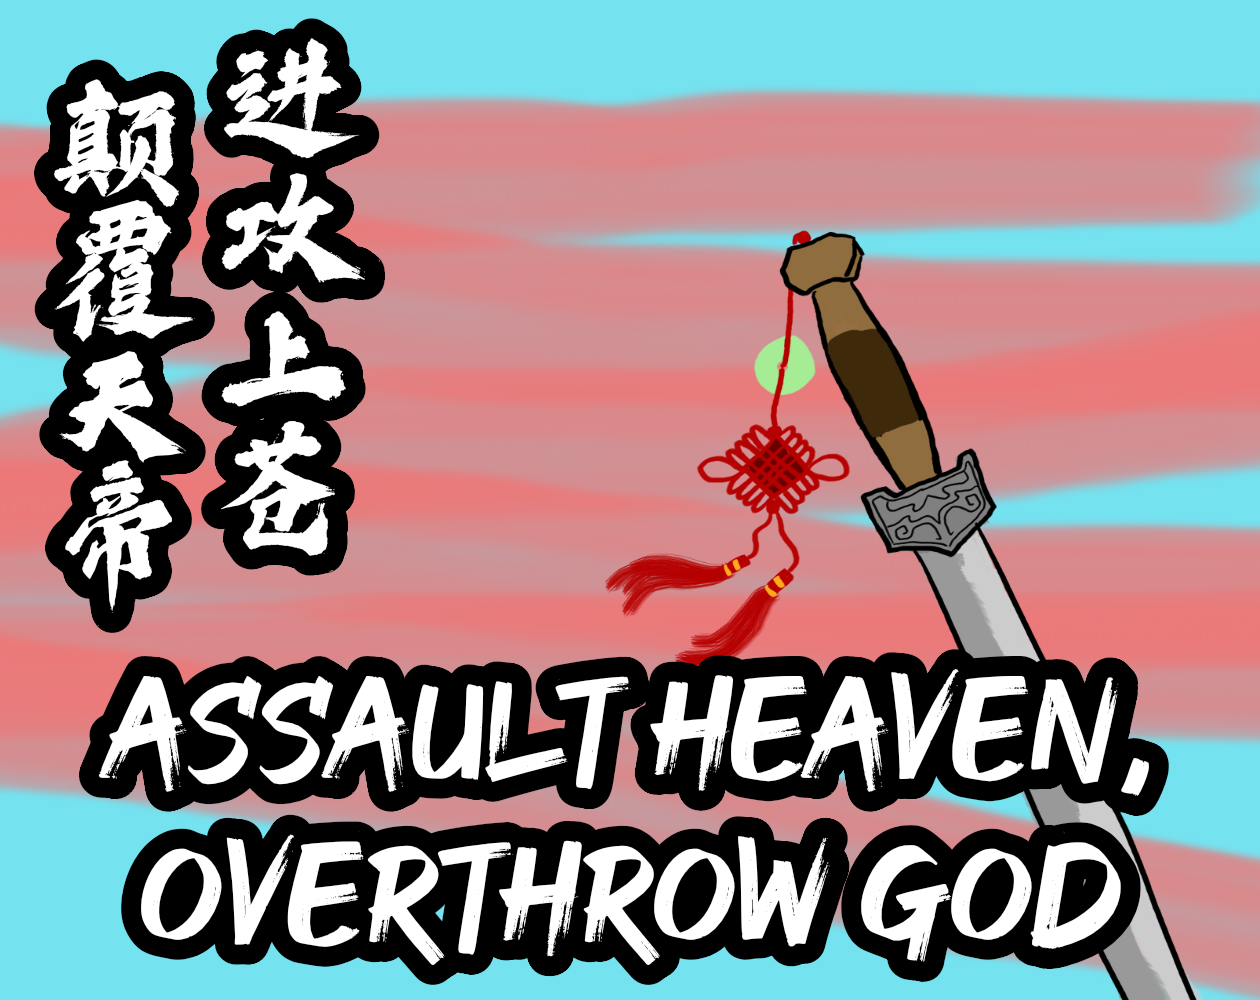 Assault Heaven, Overthrow God